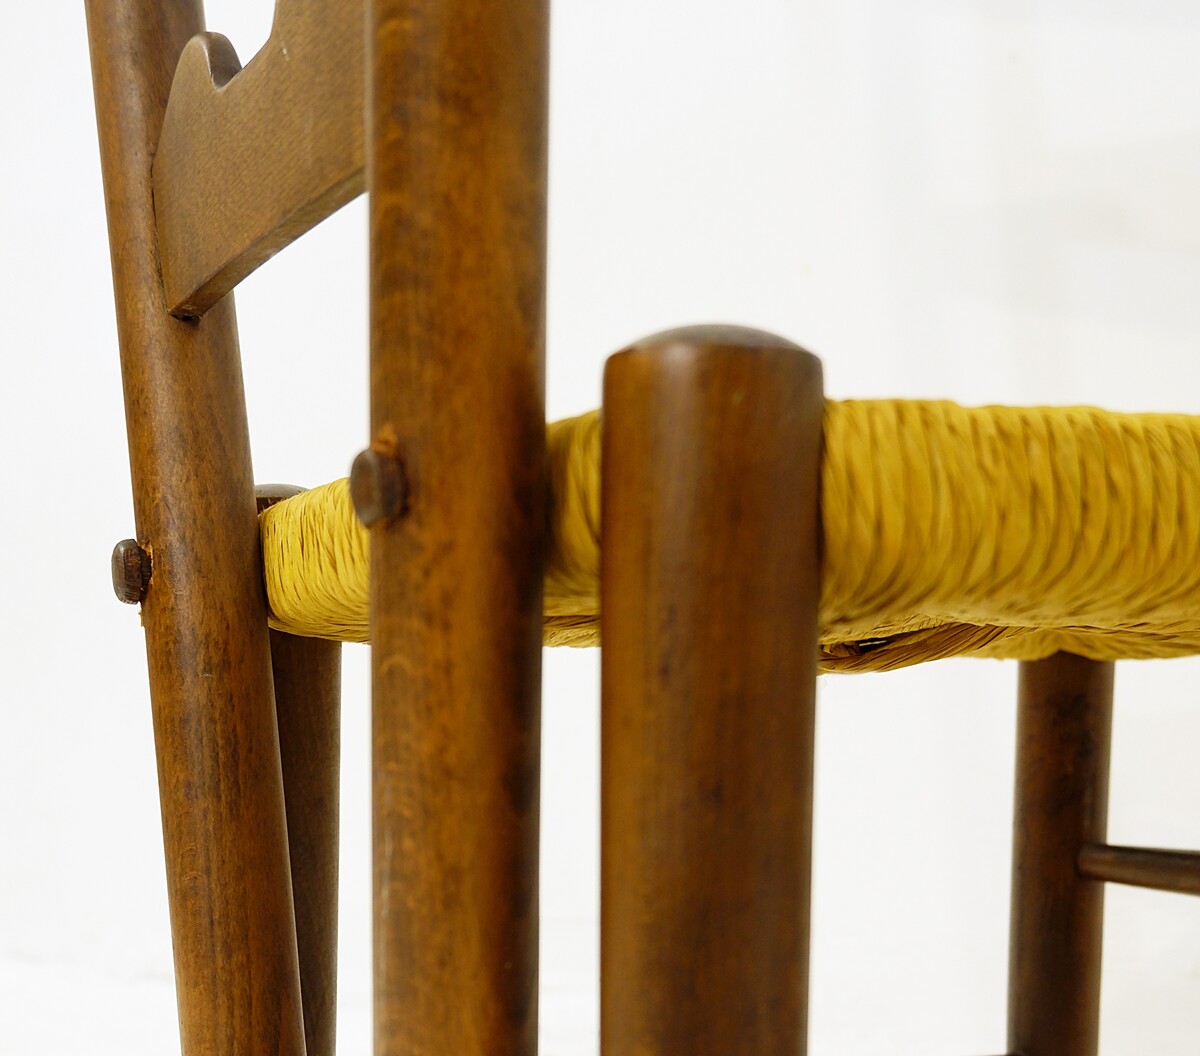 pair-of-chairs-by-gio-ponti-for-casa-e-giardino-milan-italy-circa-1939-5018388-en-max.jpg